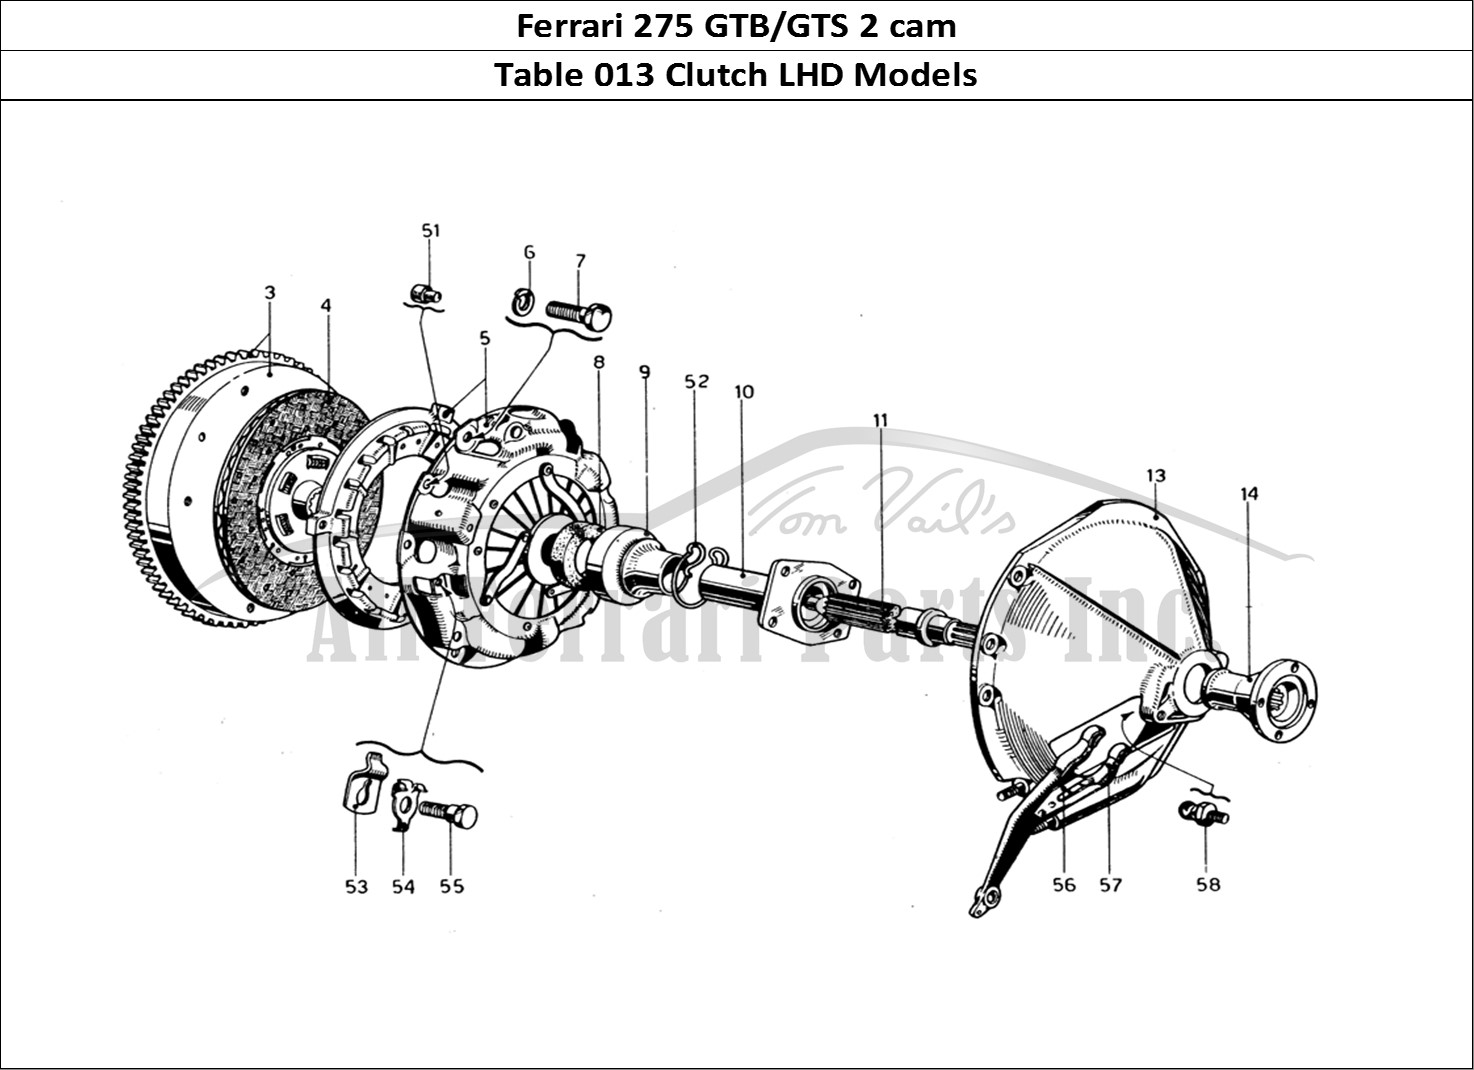 Ferrari Parts Ferrari 275 GTB/GTS 2 cam Page 013 Clutch - Left Hand Drive